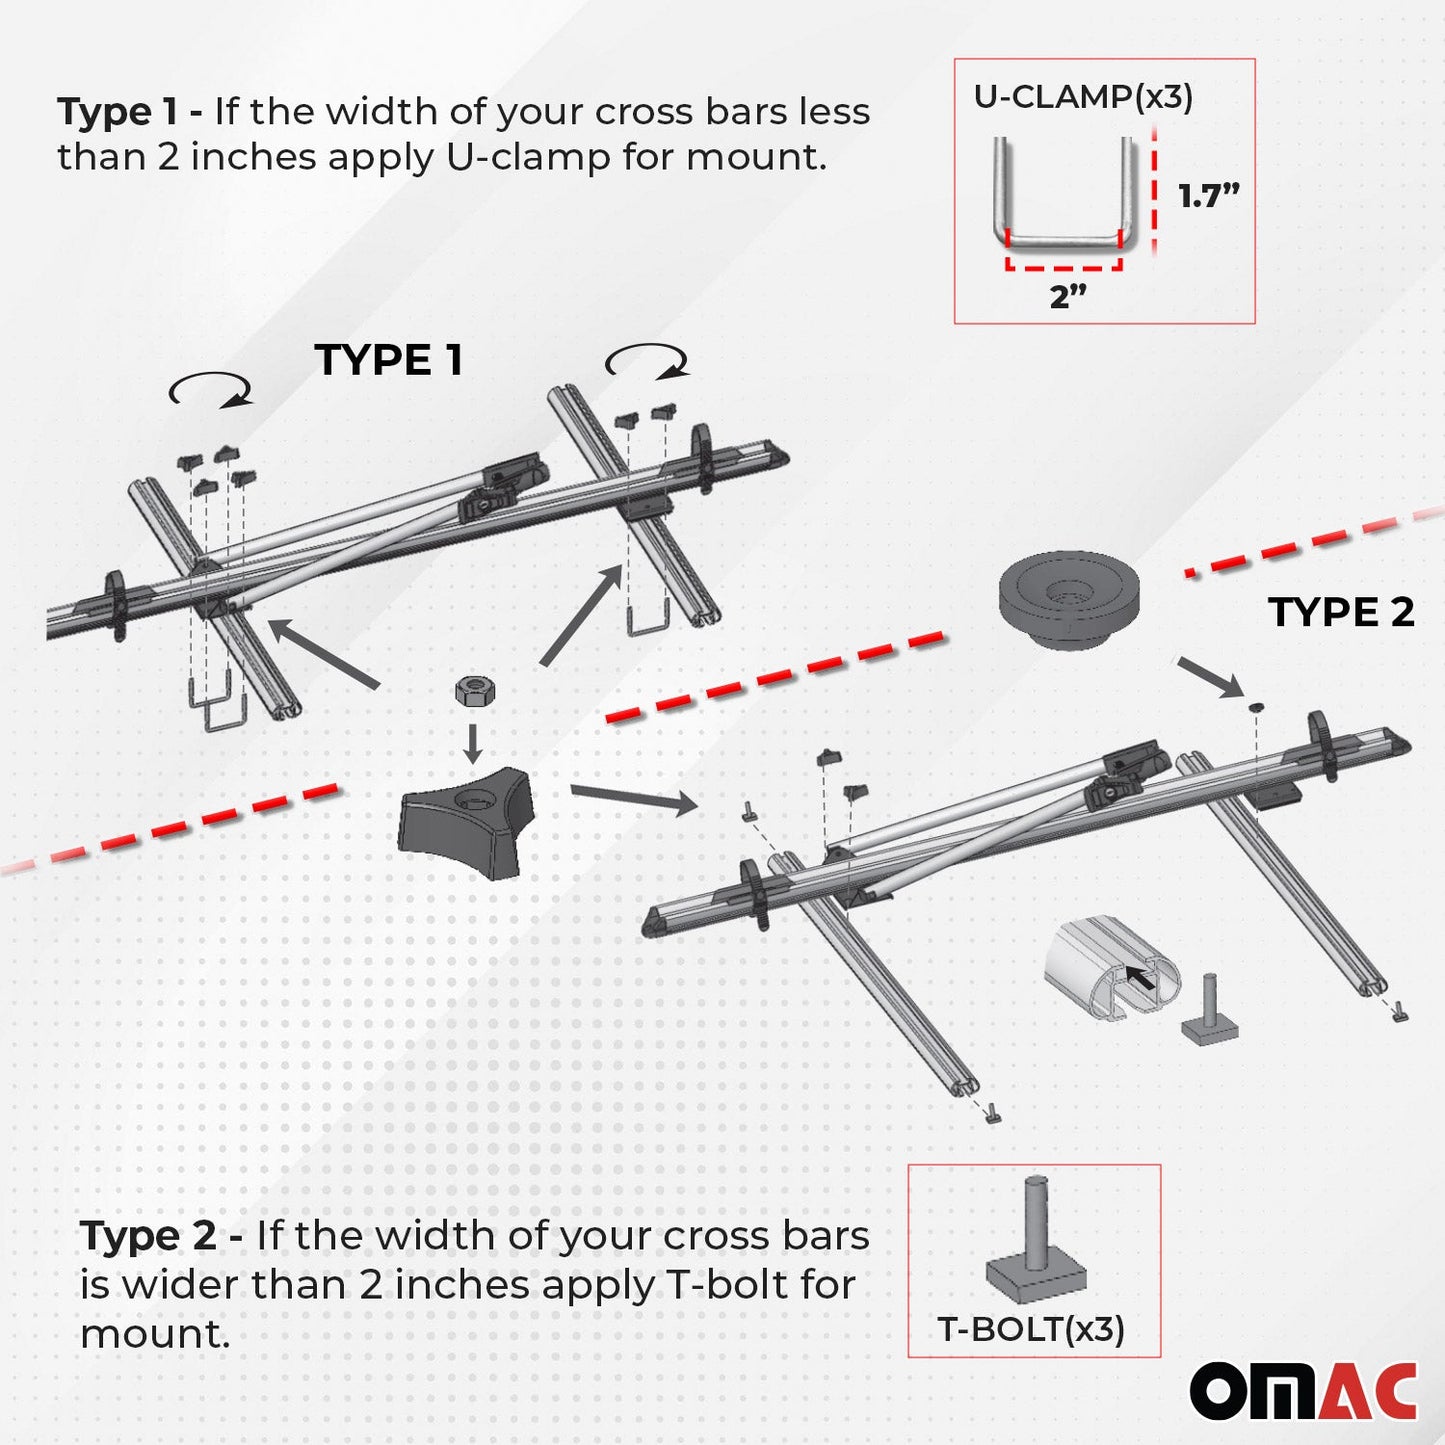 OMAC Bike Rack Carrier Roof Racks Set fits Toyota RAV4 2013-2018 Black 3x U020740